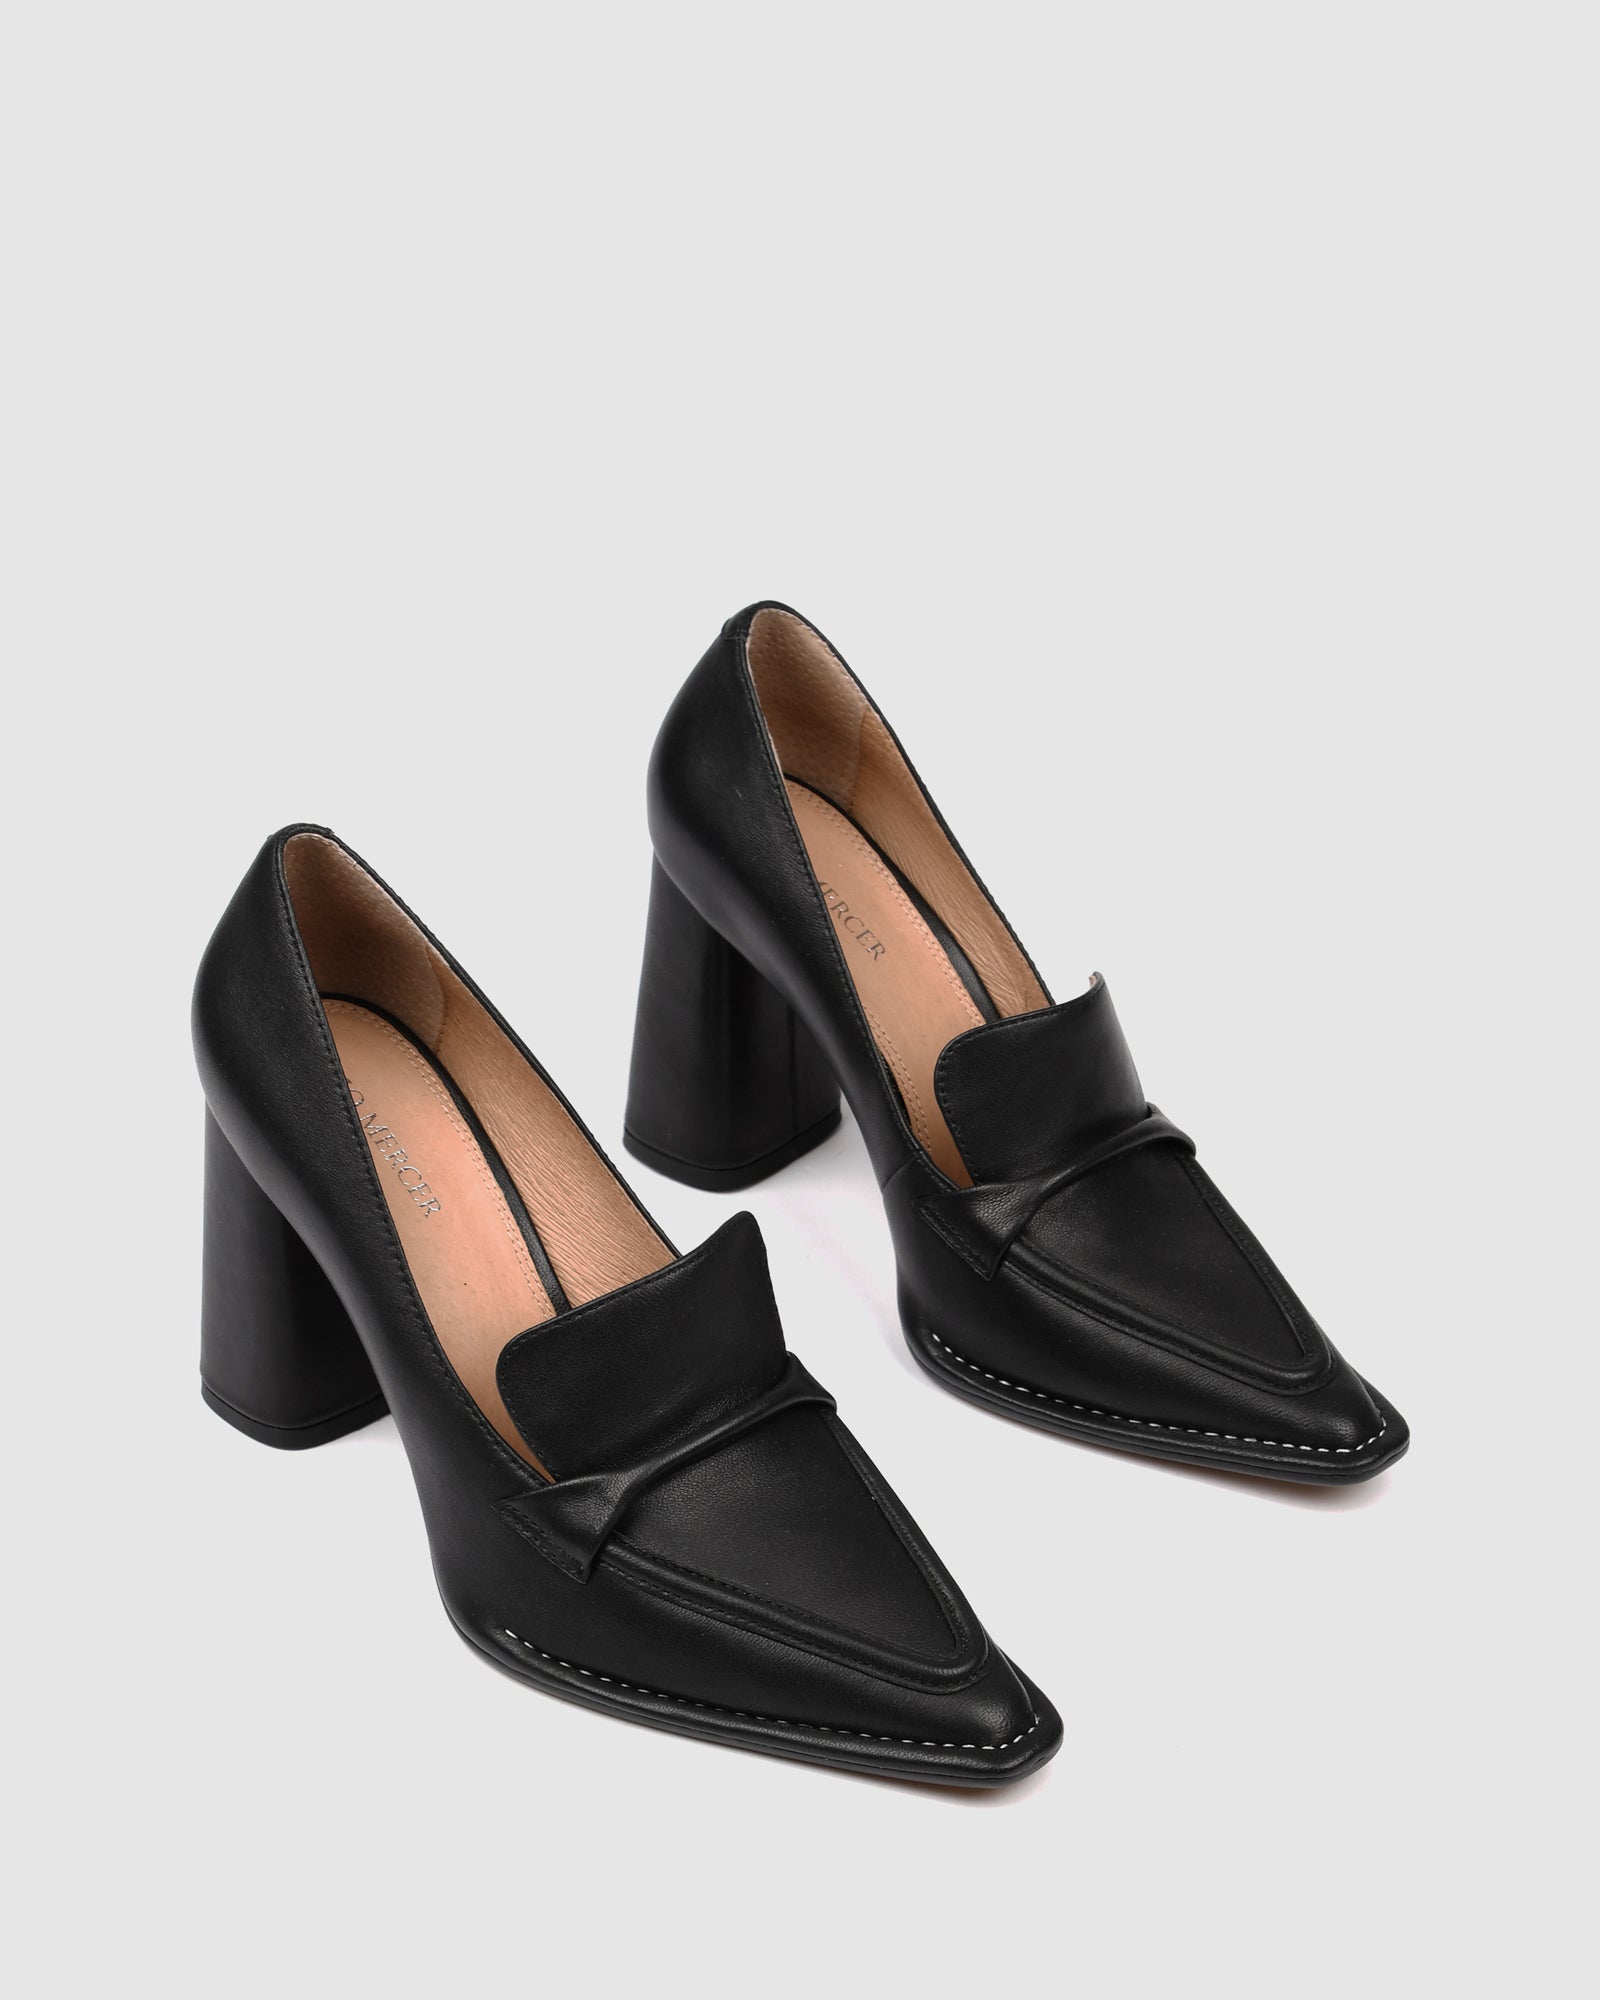 Tony Bianco | Women's Shoes Online | Heels, Boots & Sandals | Tony Bianco US